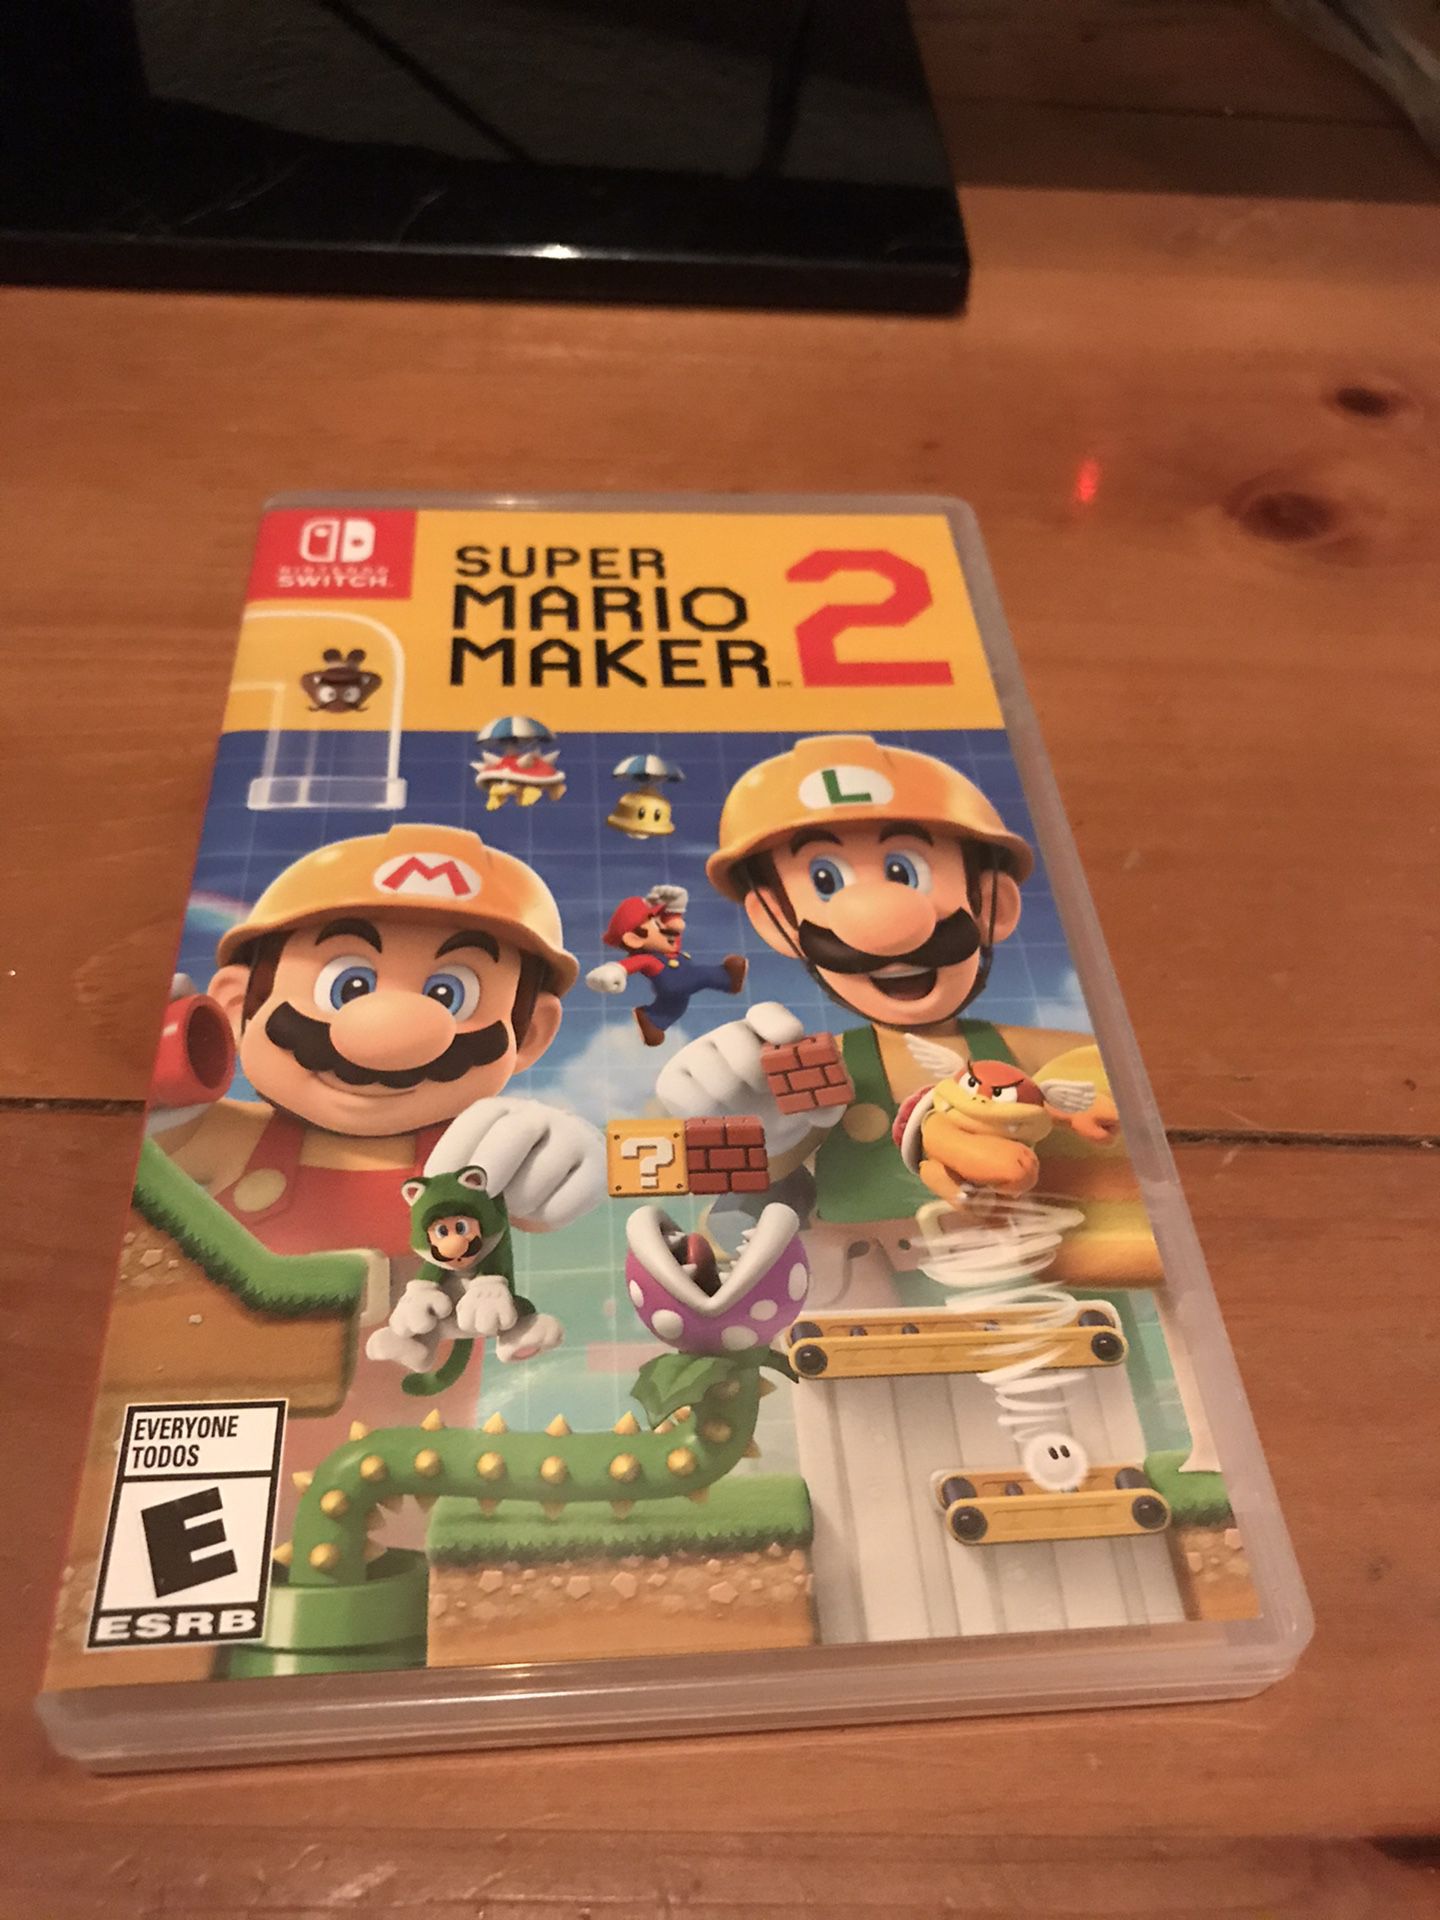 Super Mario Maker 2 for the Nintendo Switch